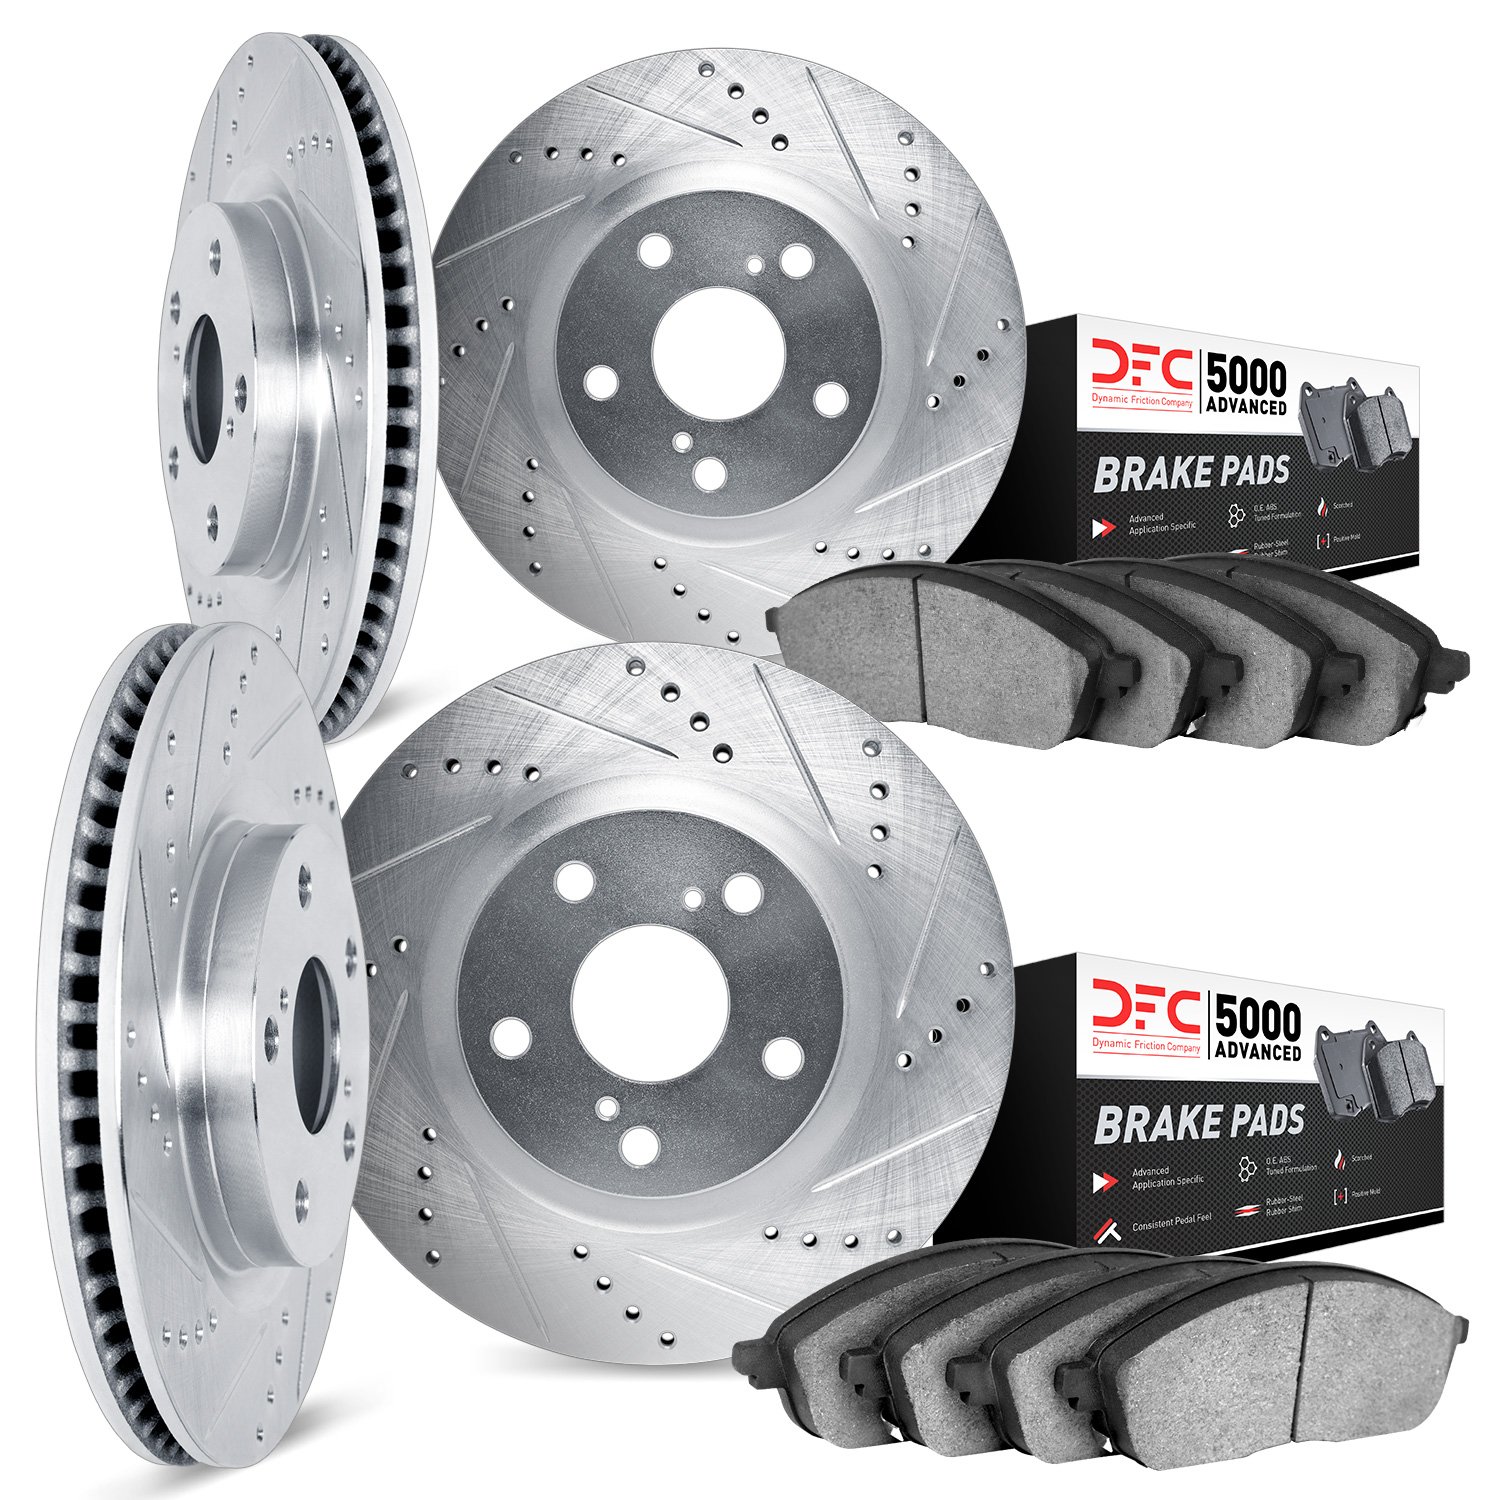 7504-31057 Drilled/Slotted Brake Rotors w/5000 Advanced Brake Pads Kit [Silver], Fits Select Multiple Makes/Models, Position: Fr